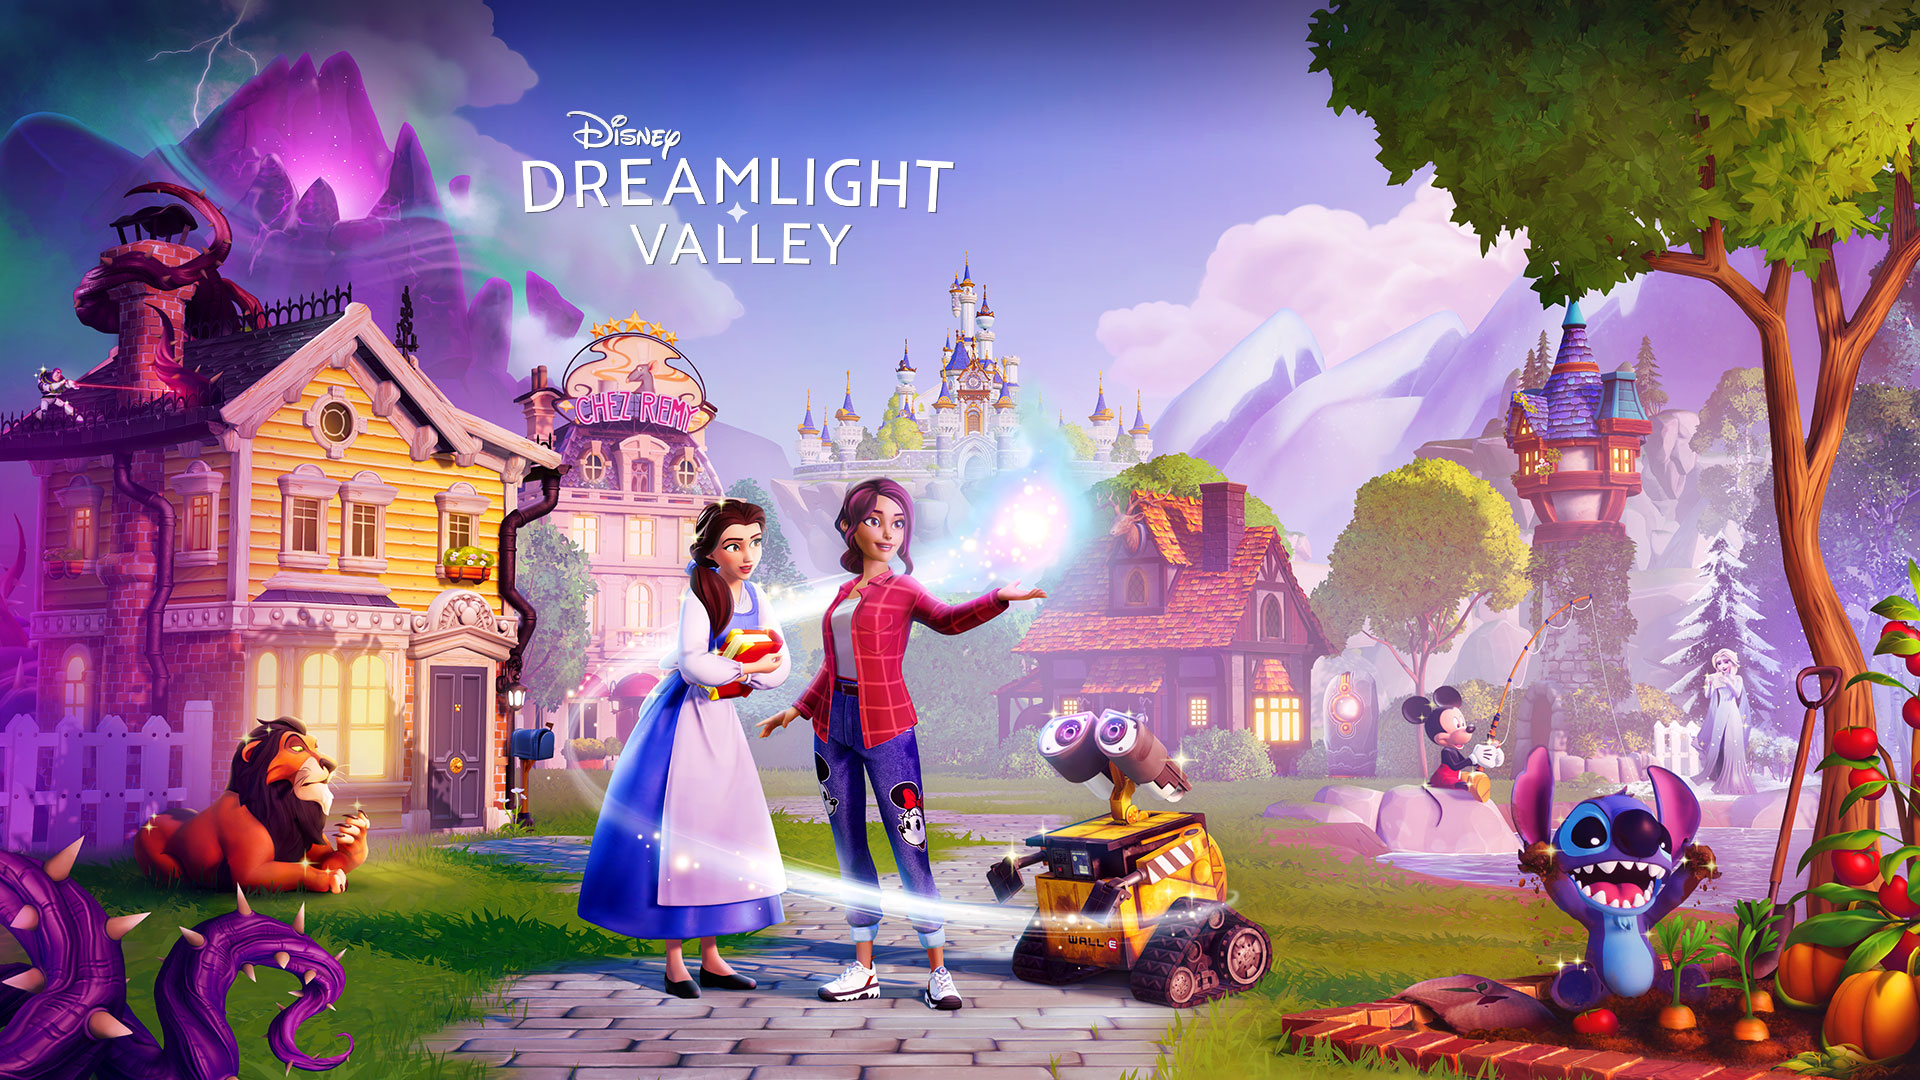 《Disney Dreamlight Valley》，在奇特又有趣的小鎮裡，貝兒和瓦力等迪士尼角色聚集在一名玩家周圍。